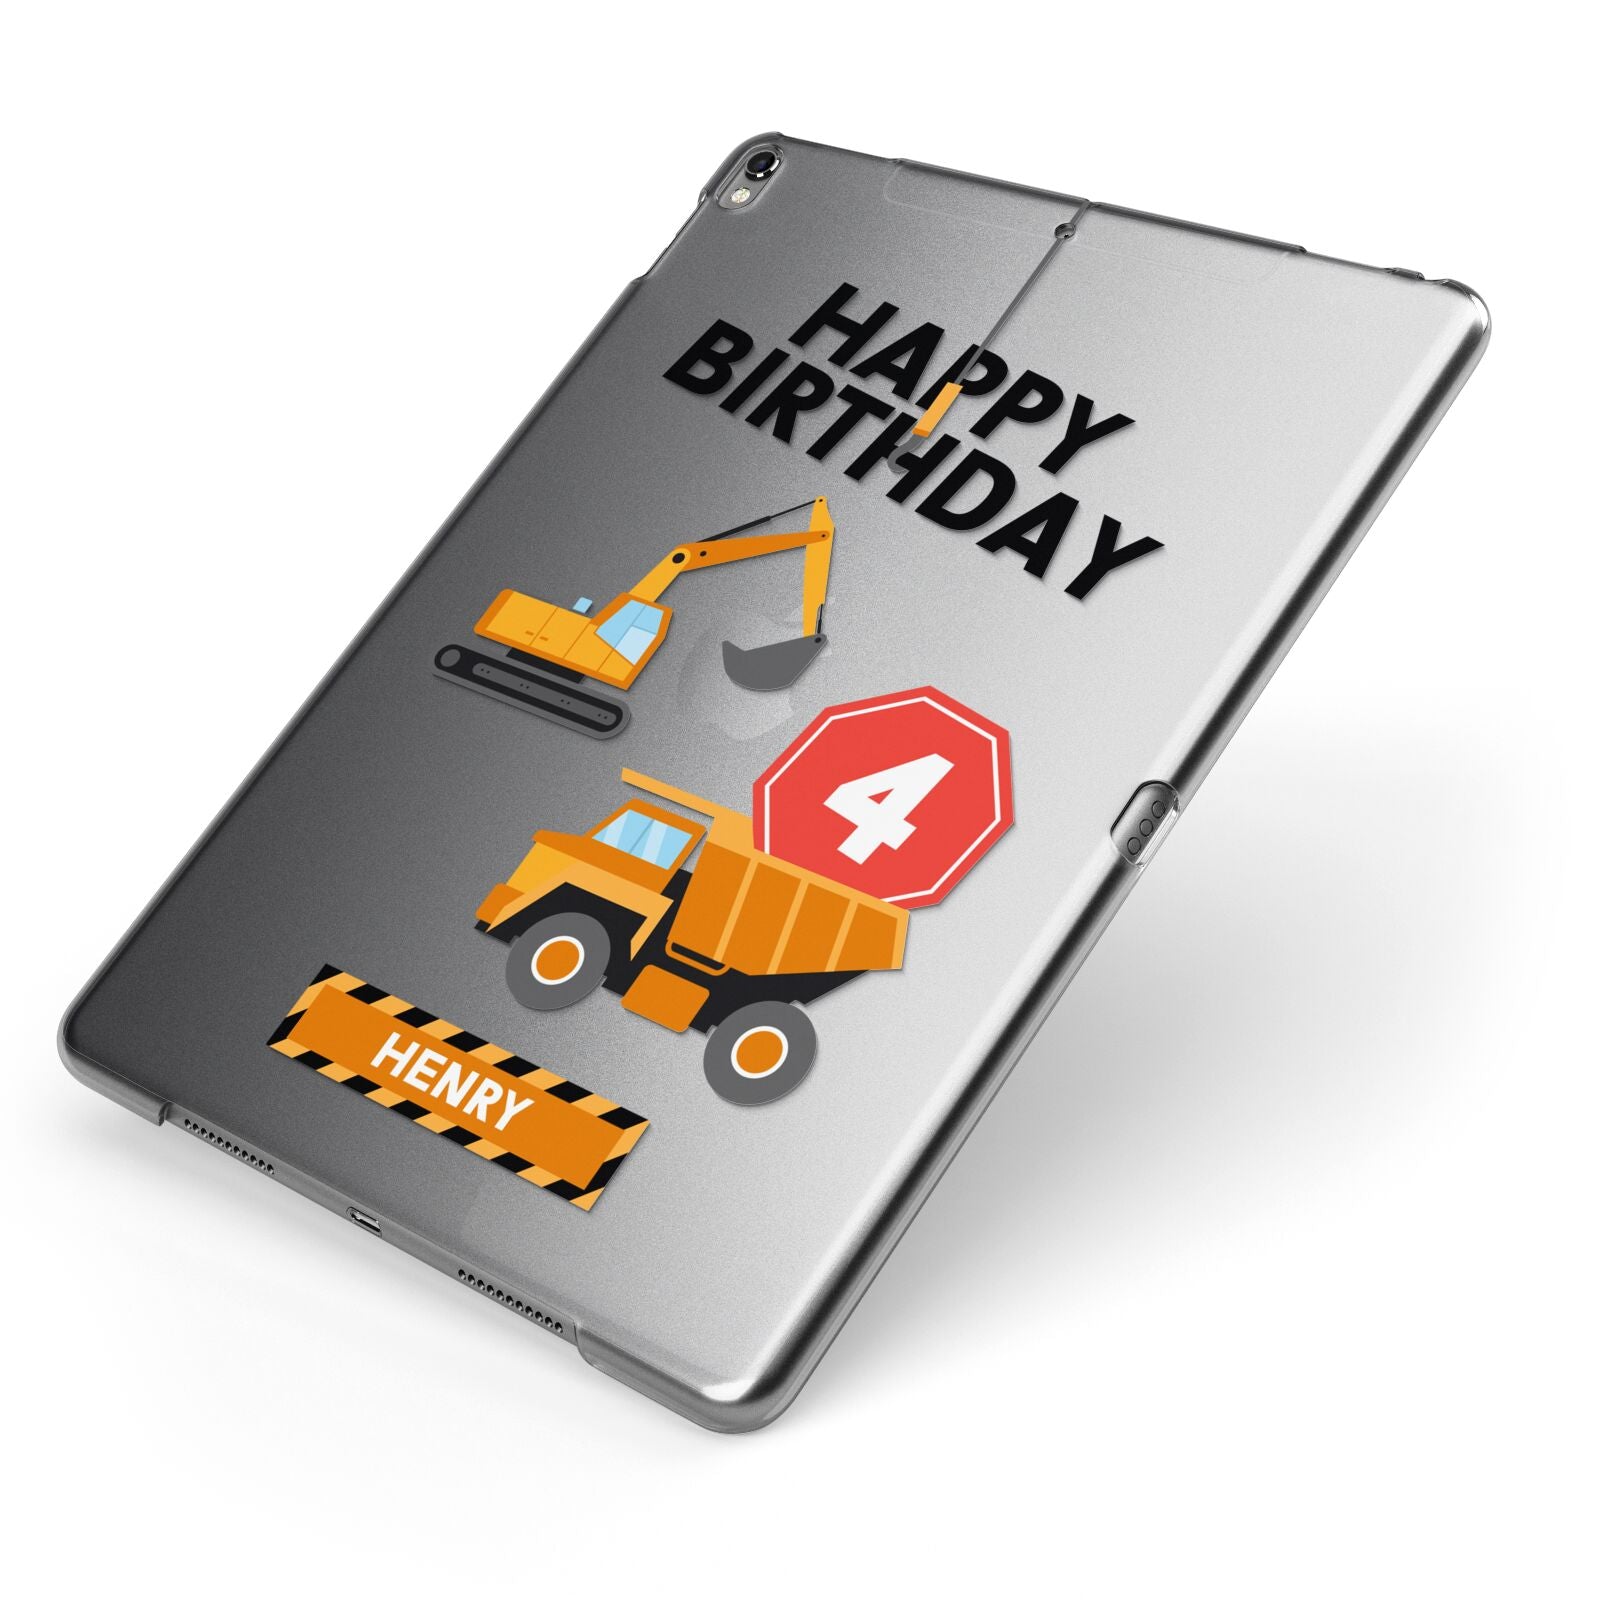 Boys Birthday Diggers Personalised Apple iPad Case on Grey iPad Side View